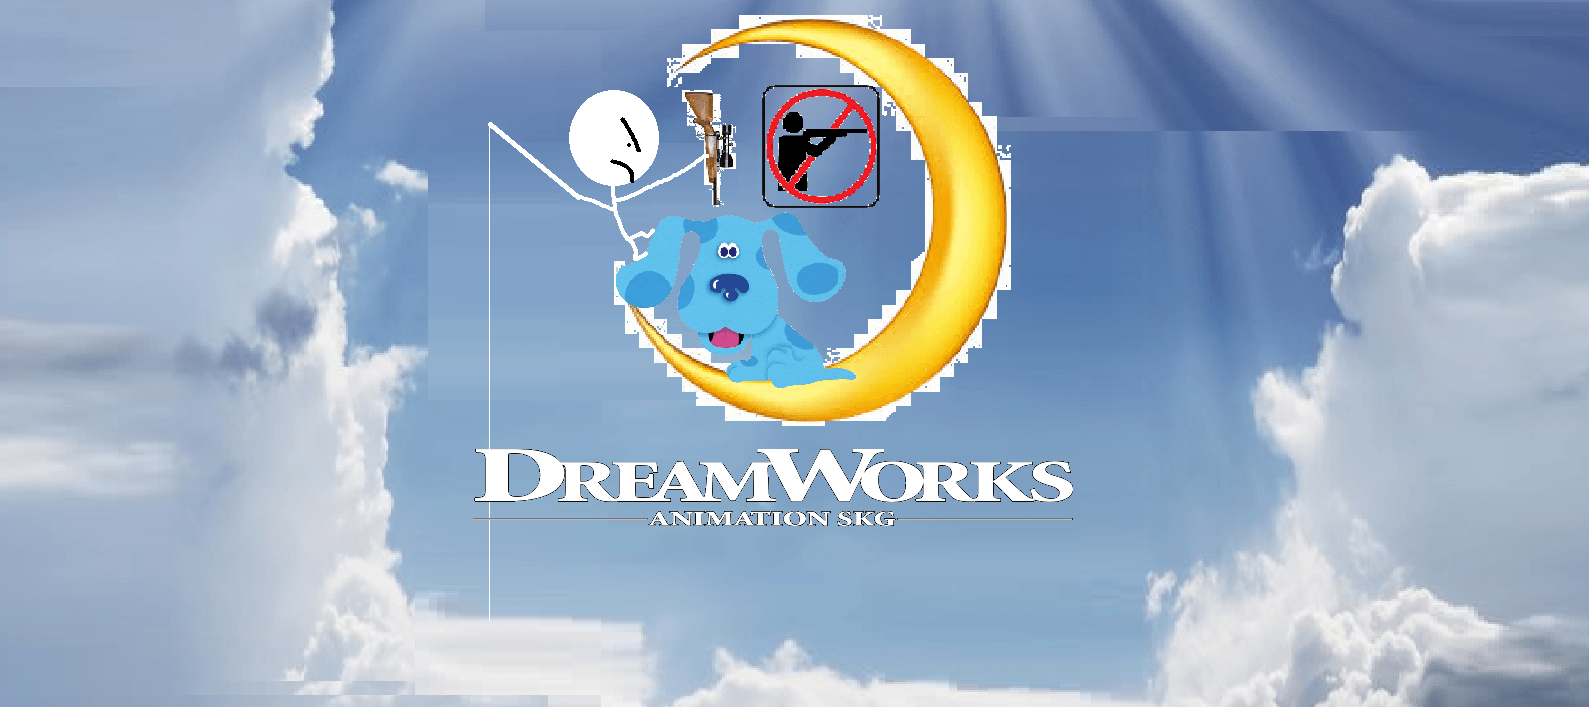 Dreamworks Roblox Logo Games